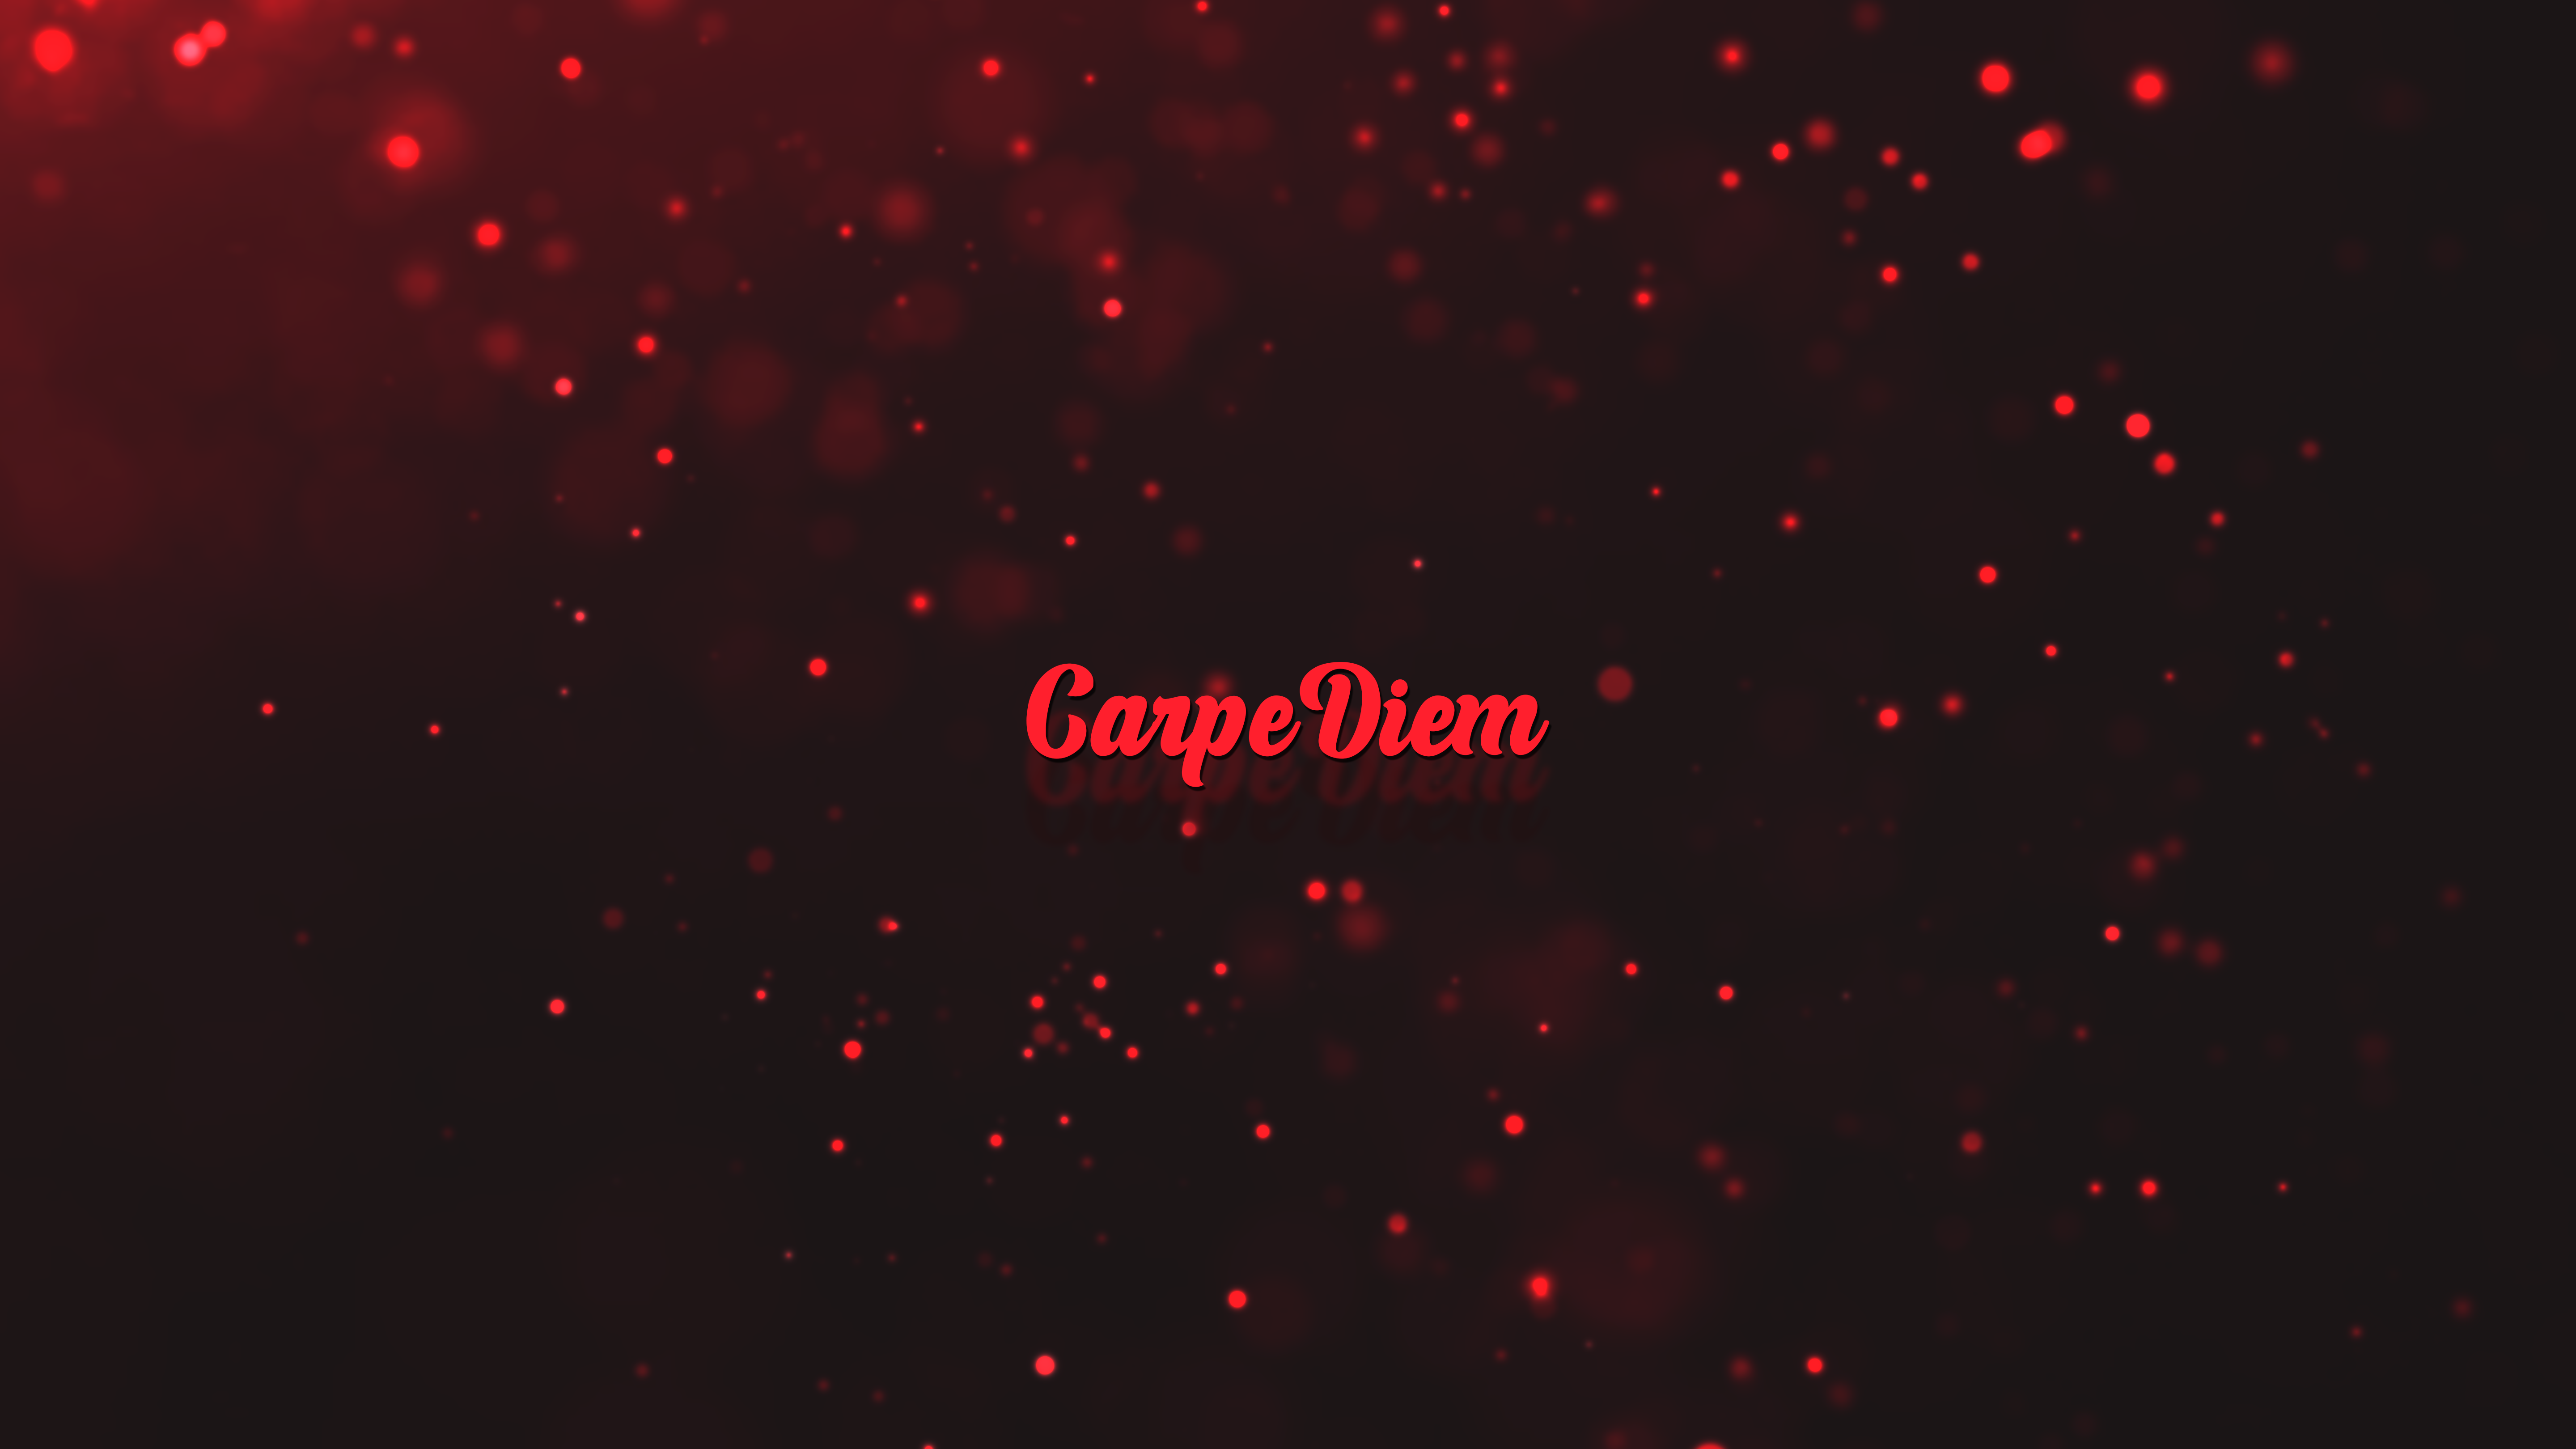 General 5760x3240 Carpe Diem red red background minimalism typography digital art